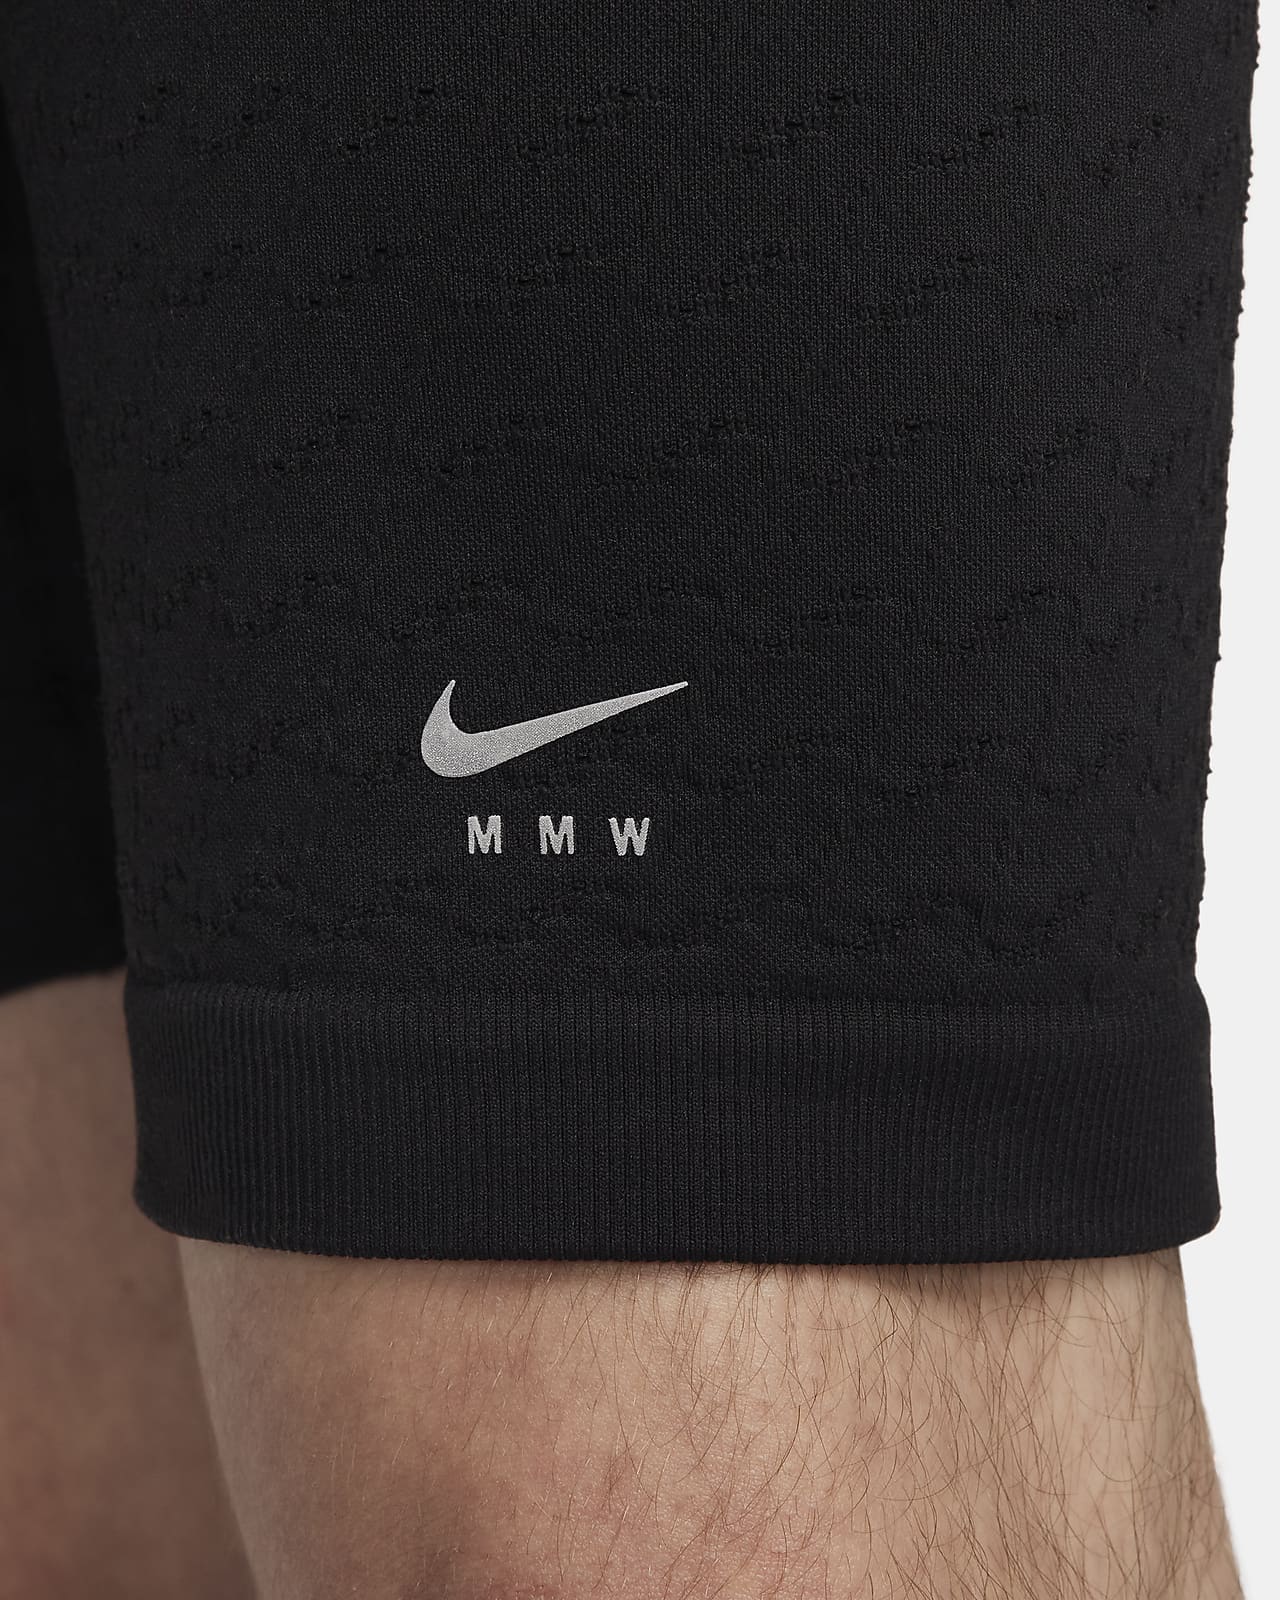 Nike x MMW Men's 3-in-1 Shorts